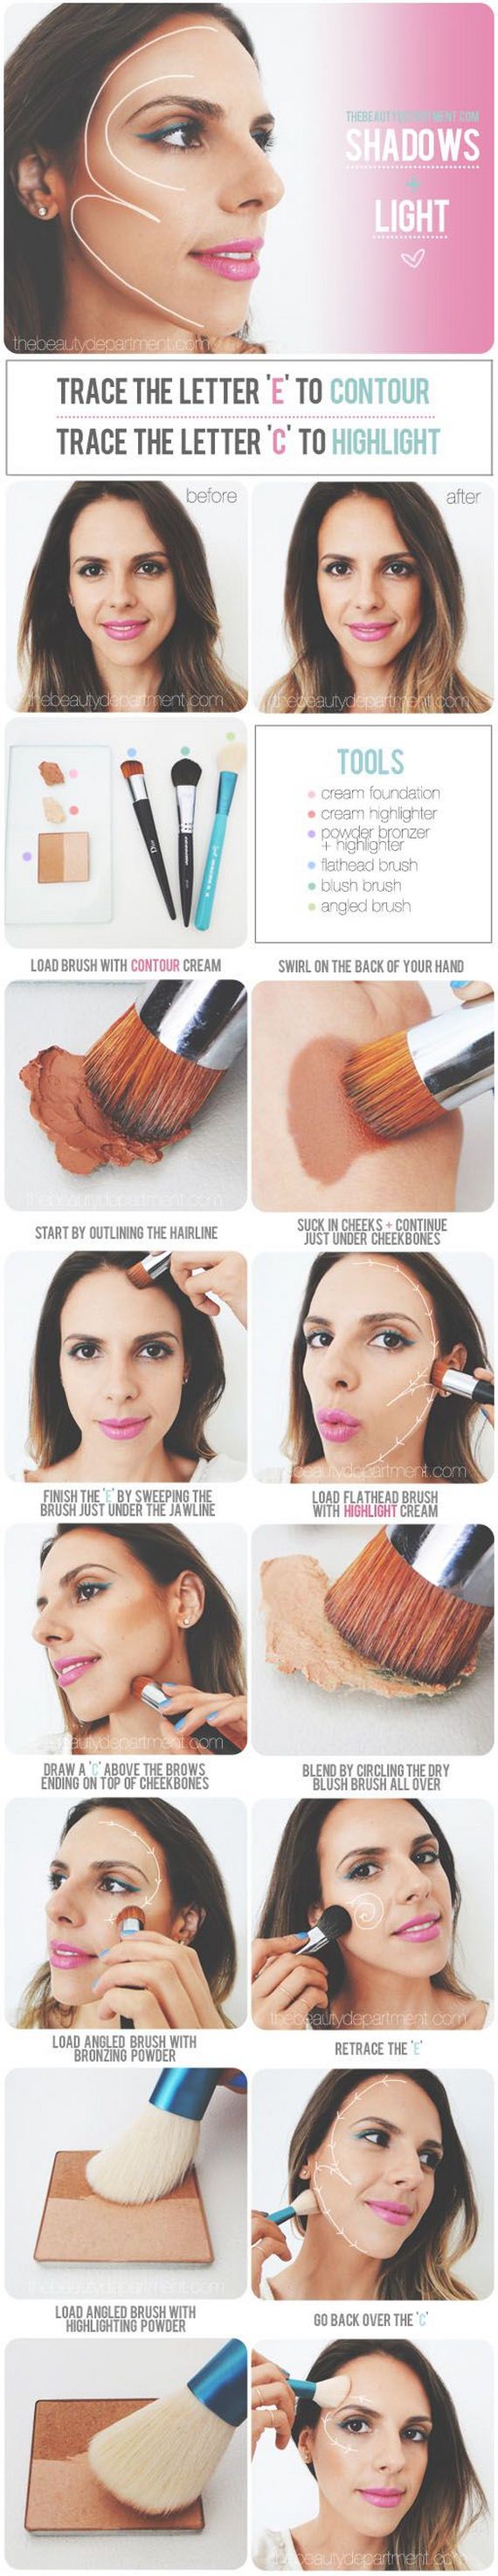 13-makeup-tutorials